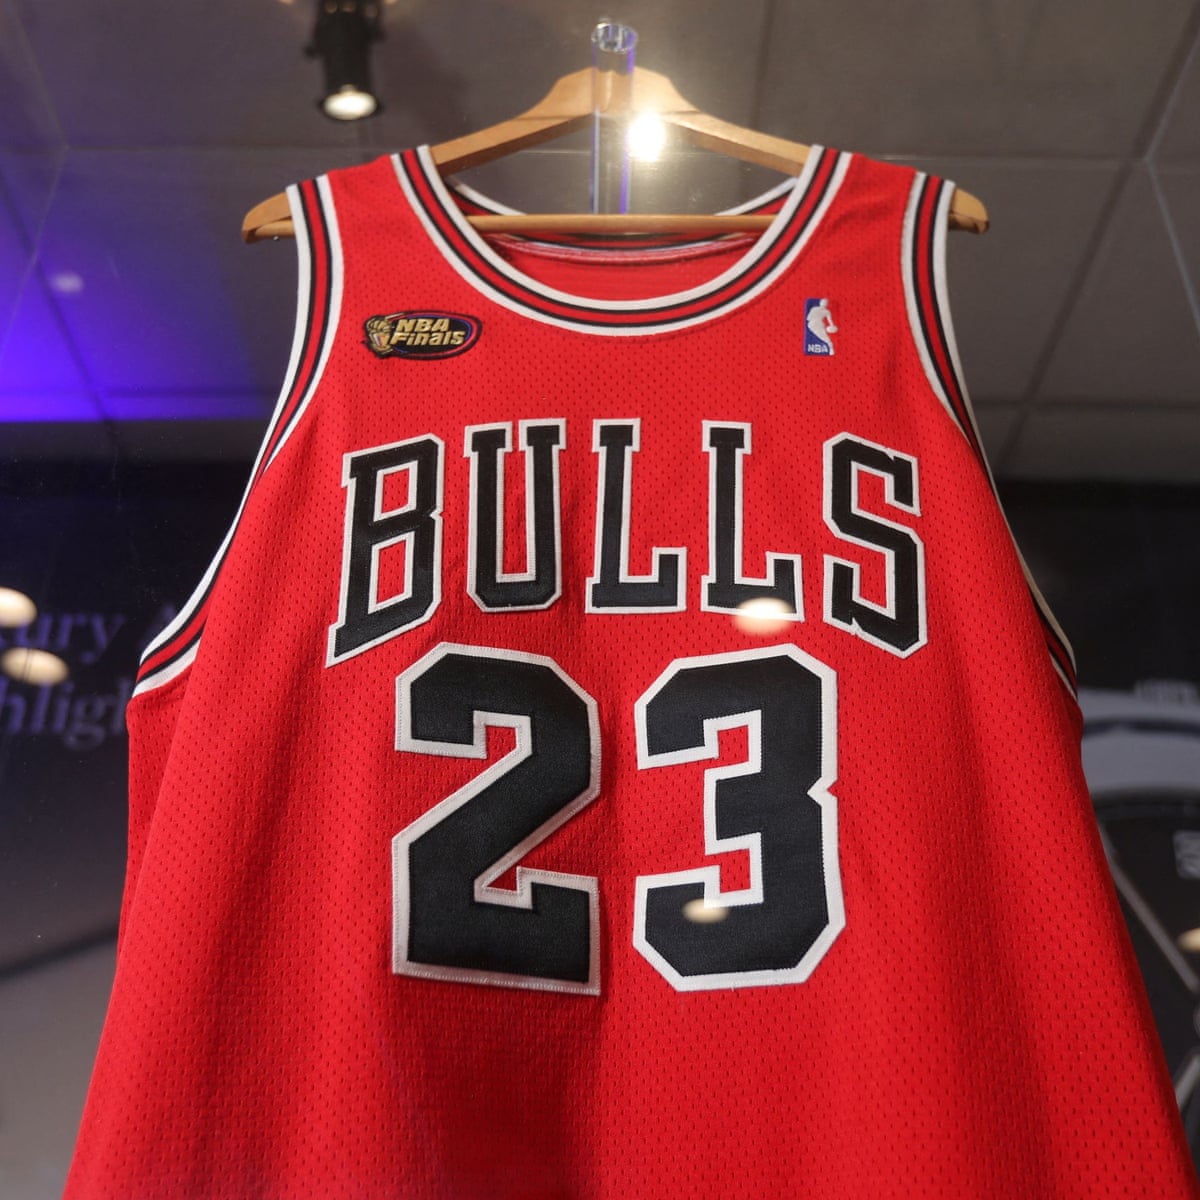 Chip frelsen spørgeskema Michael Jordan's 'Last Dance' Chicago Bulls jersey sells for record $10.1m  | Michael Jordan | The Guardian